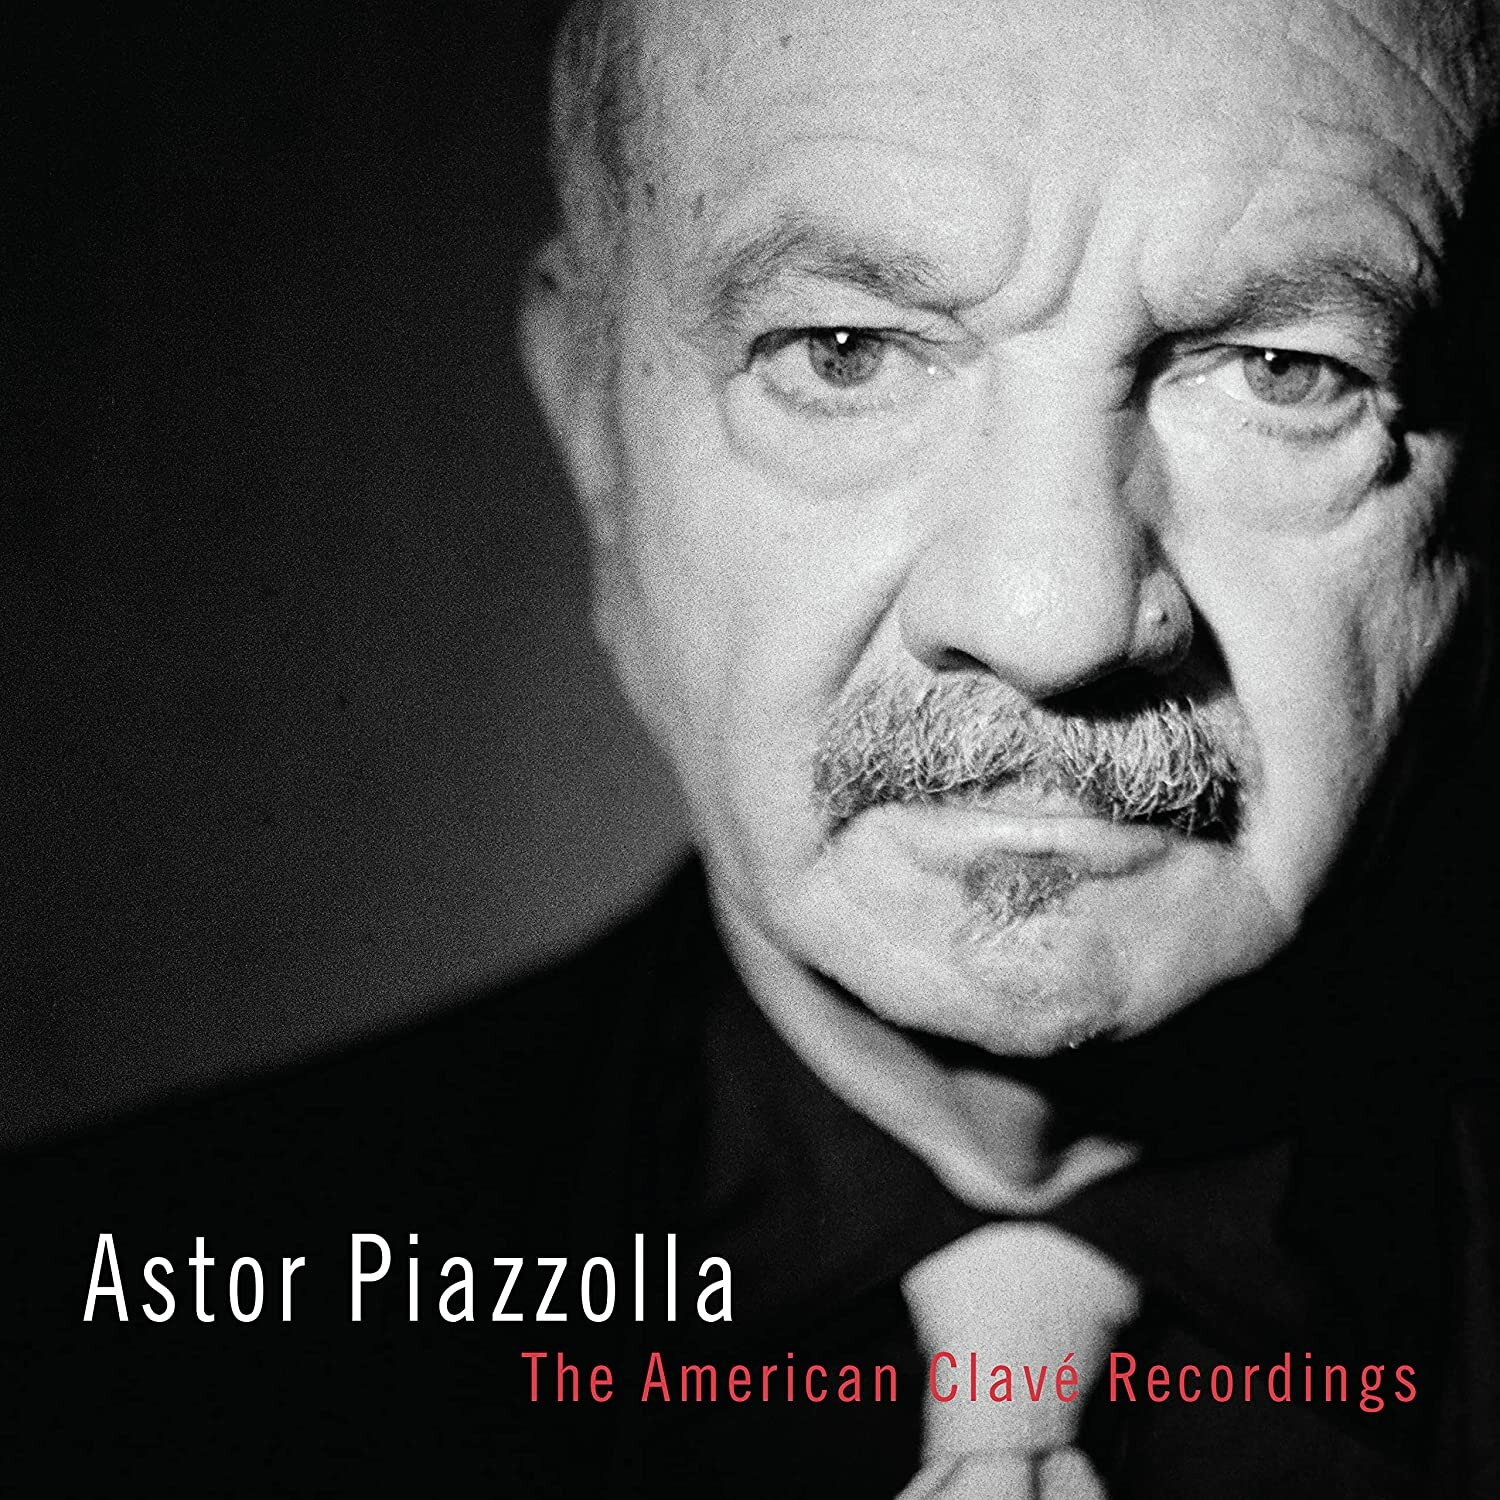 Piazzolla Astor "Виниловая пластинка Piazzolla Astor American Clave Recordings"